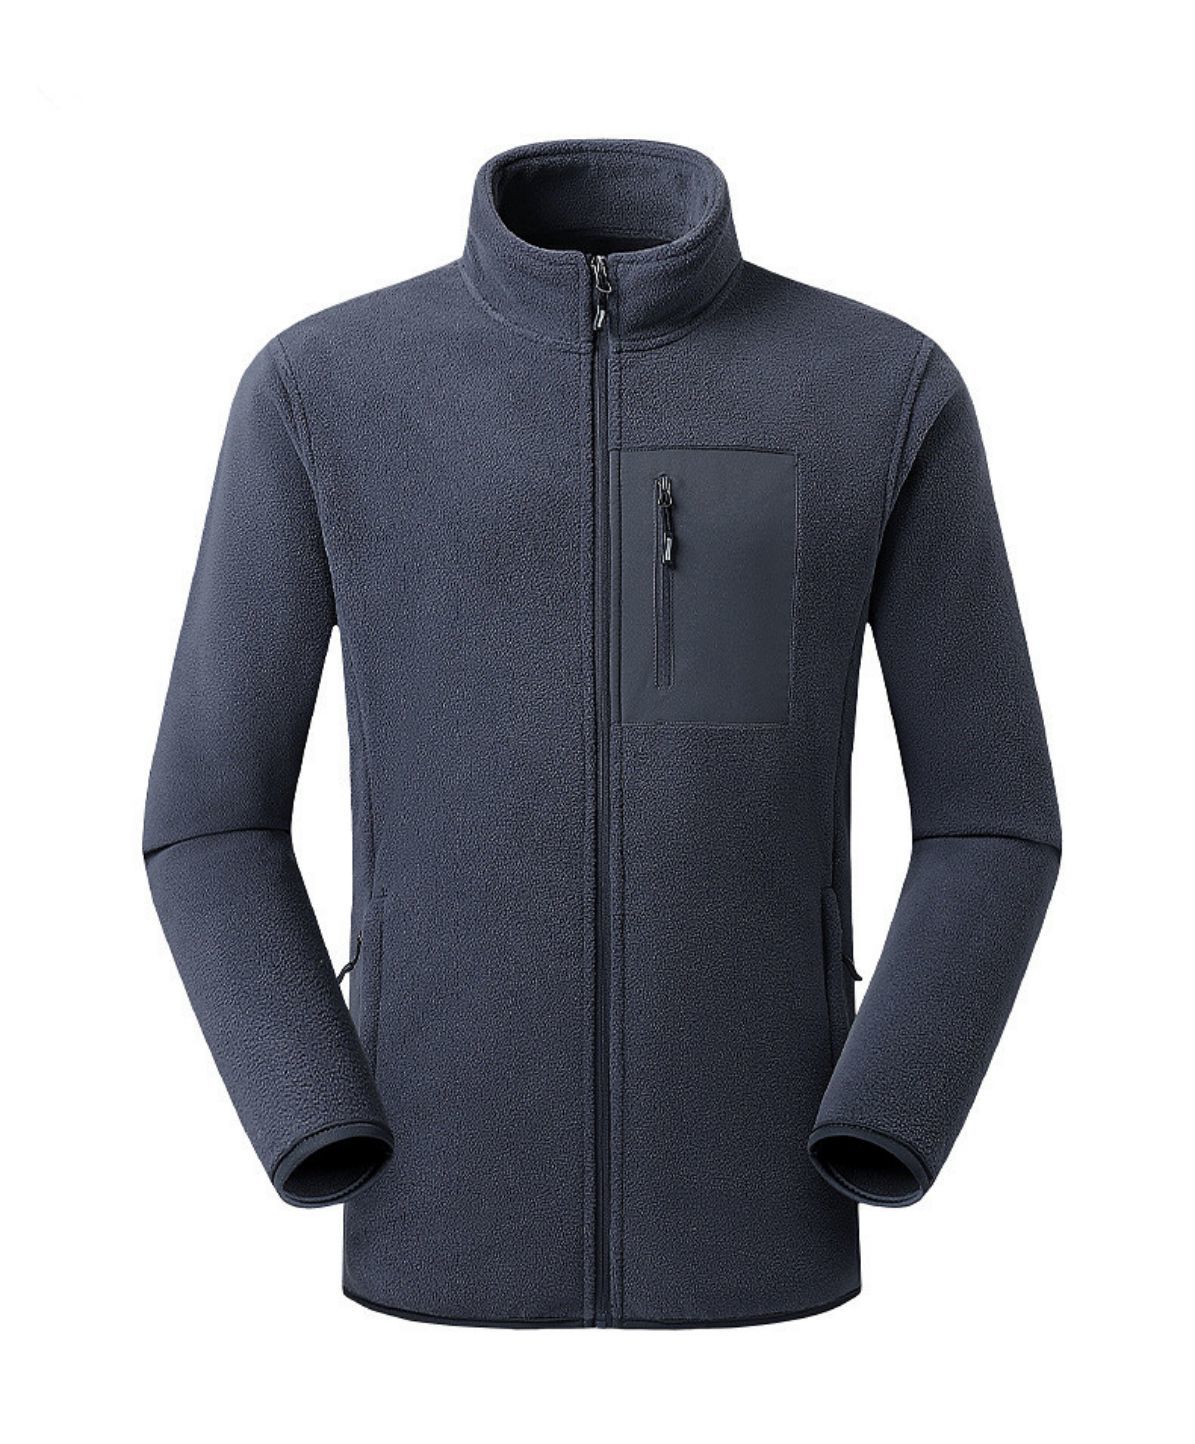 Blank Wholesale Sherpa Wool Jacket with Hood Fleece Zip up Jacket Custom  Sherpa Fleece Jacket Men - China Jacket and Sherpa Jacket price